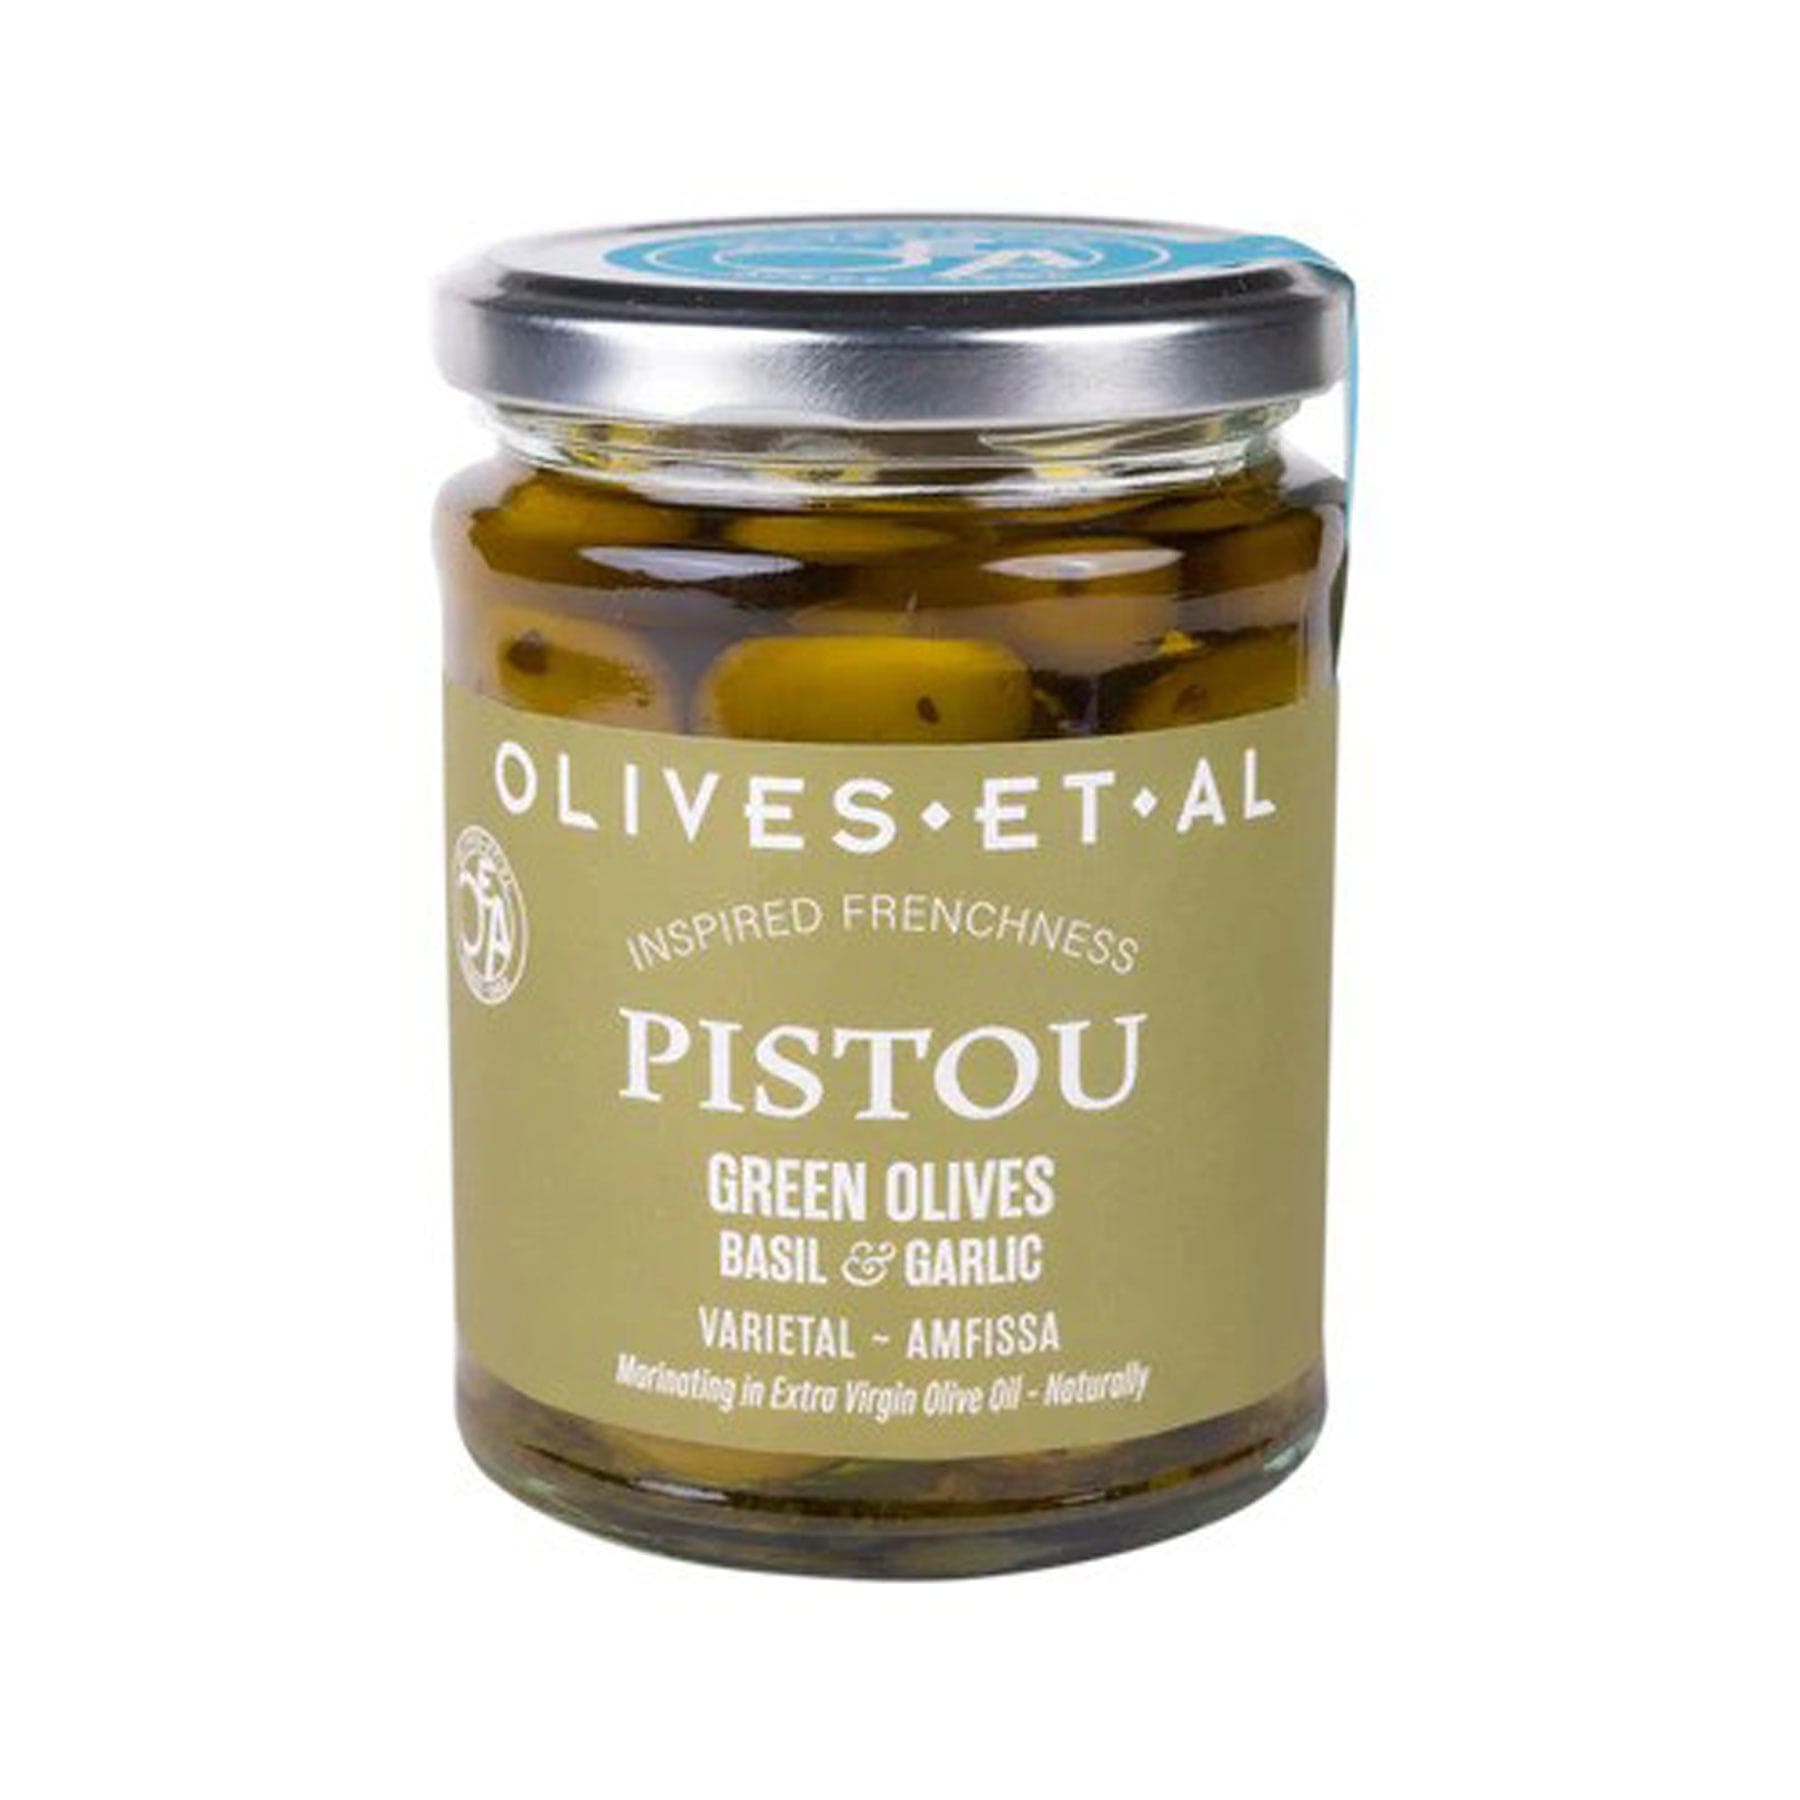 Pistou basil & garlic olives 250g